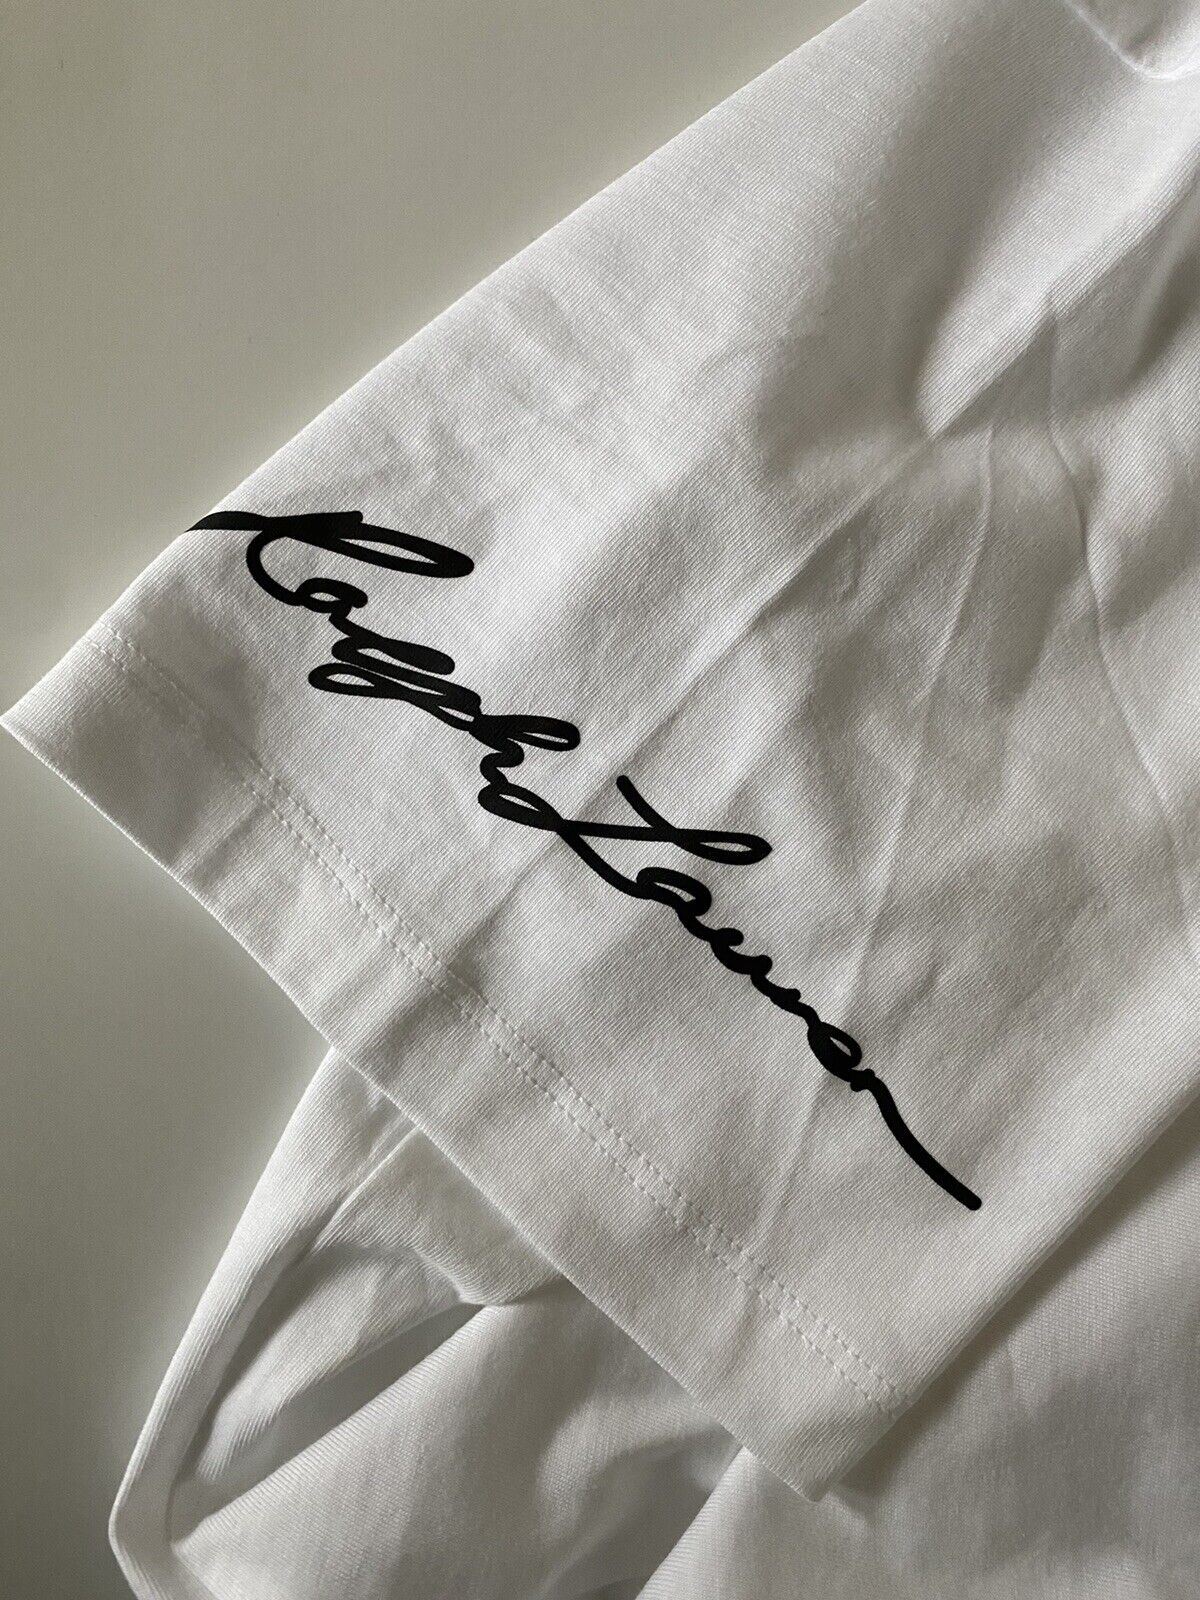 Neu mit Etikett: 65 $ Polo Ralph Lauren Kurzarm-Logo-T-Shirt Weiß Large 